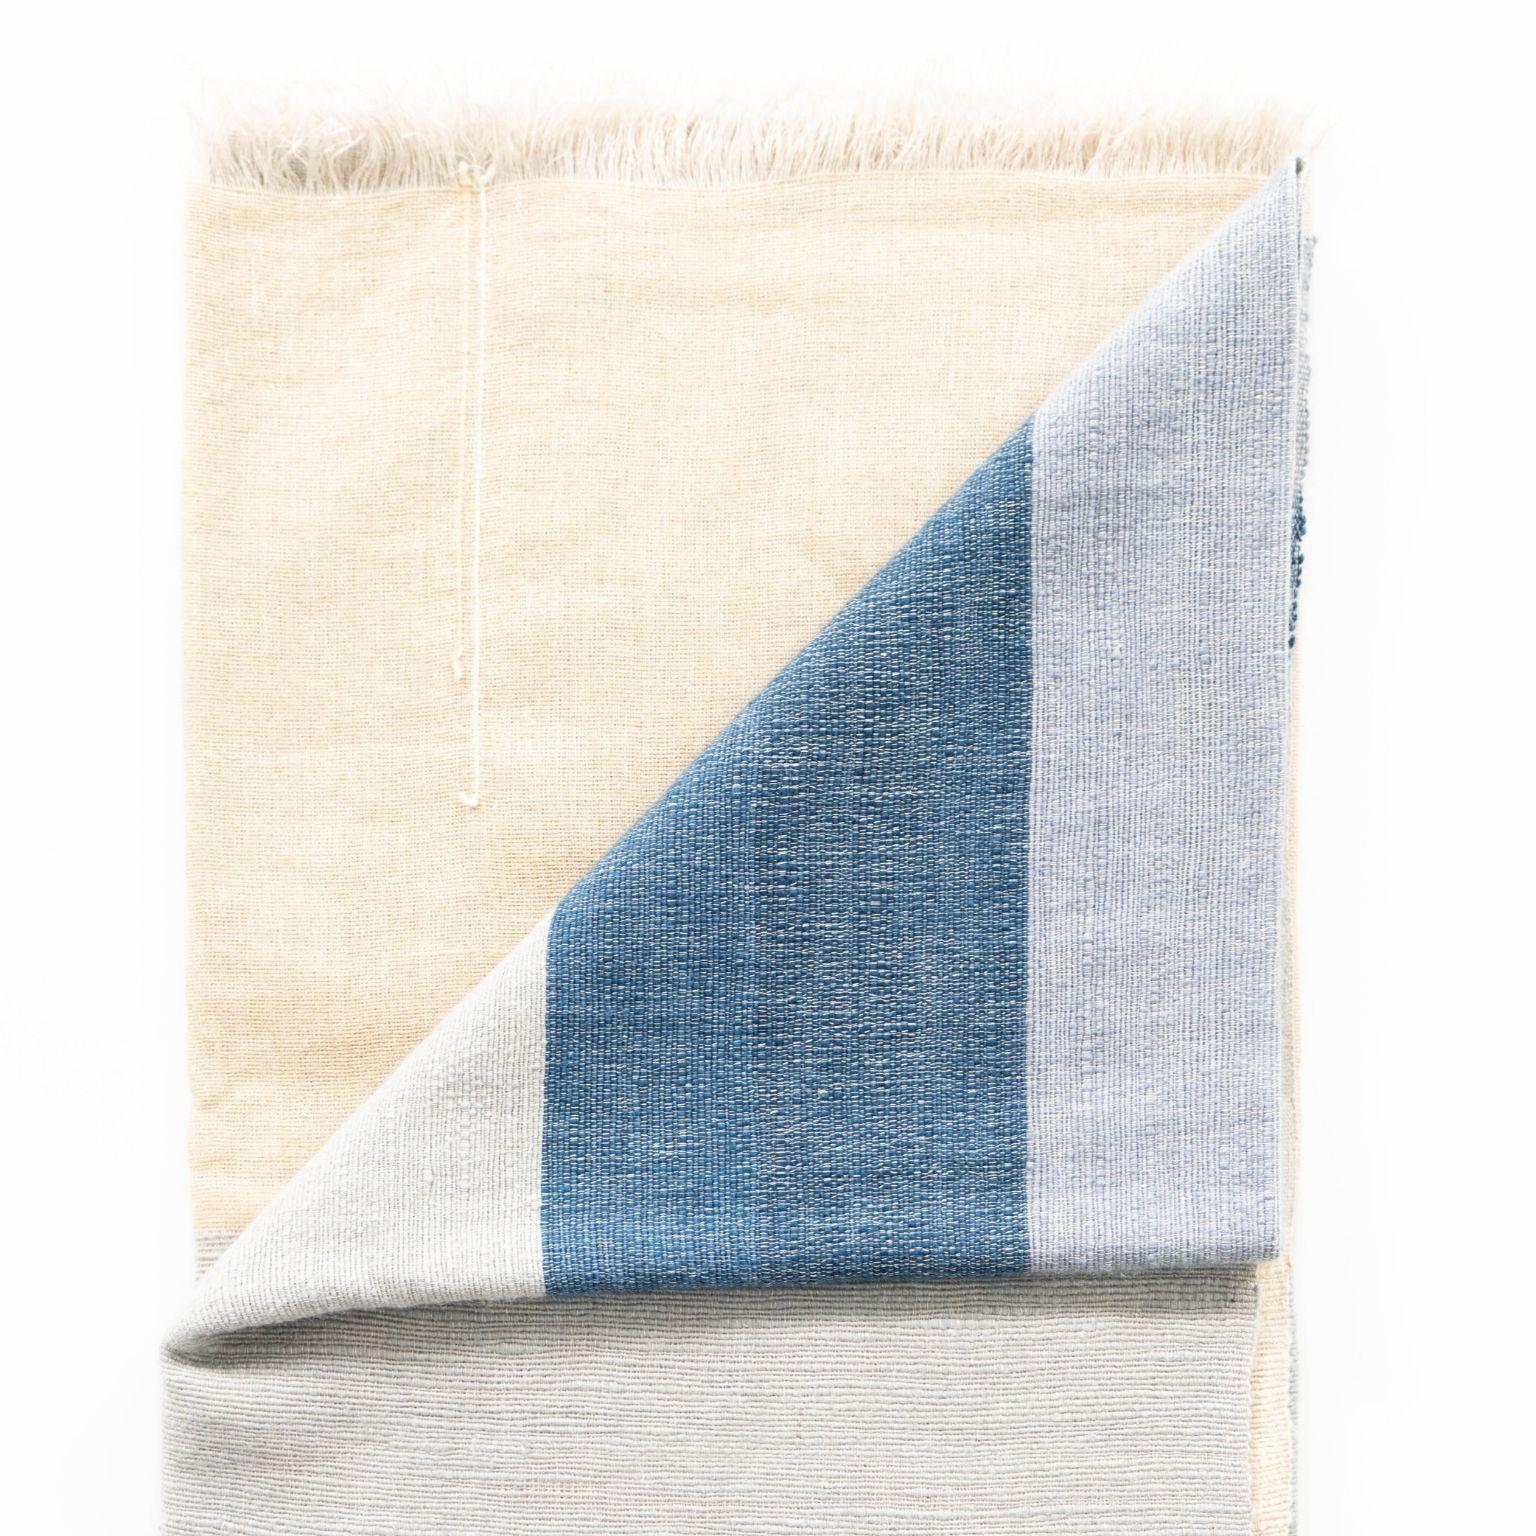 Ceru Handloom Merino Throw / Blanket in Neutral Shades of Cream & Serene Blue For Sale 3